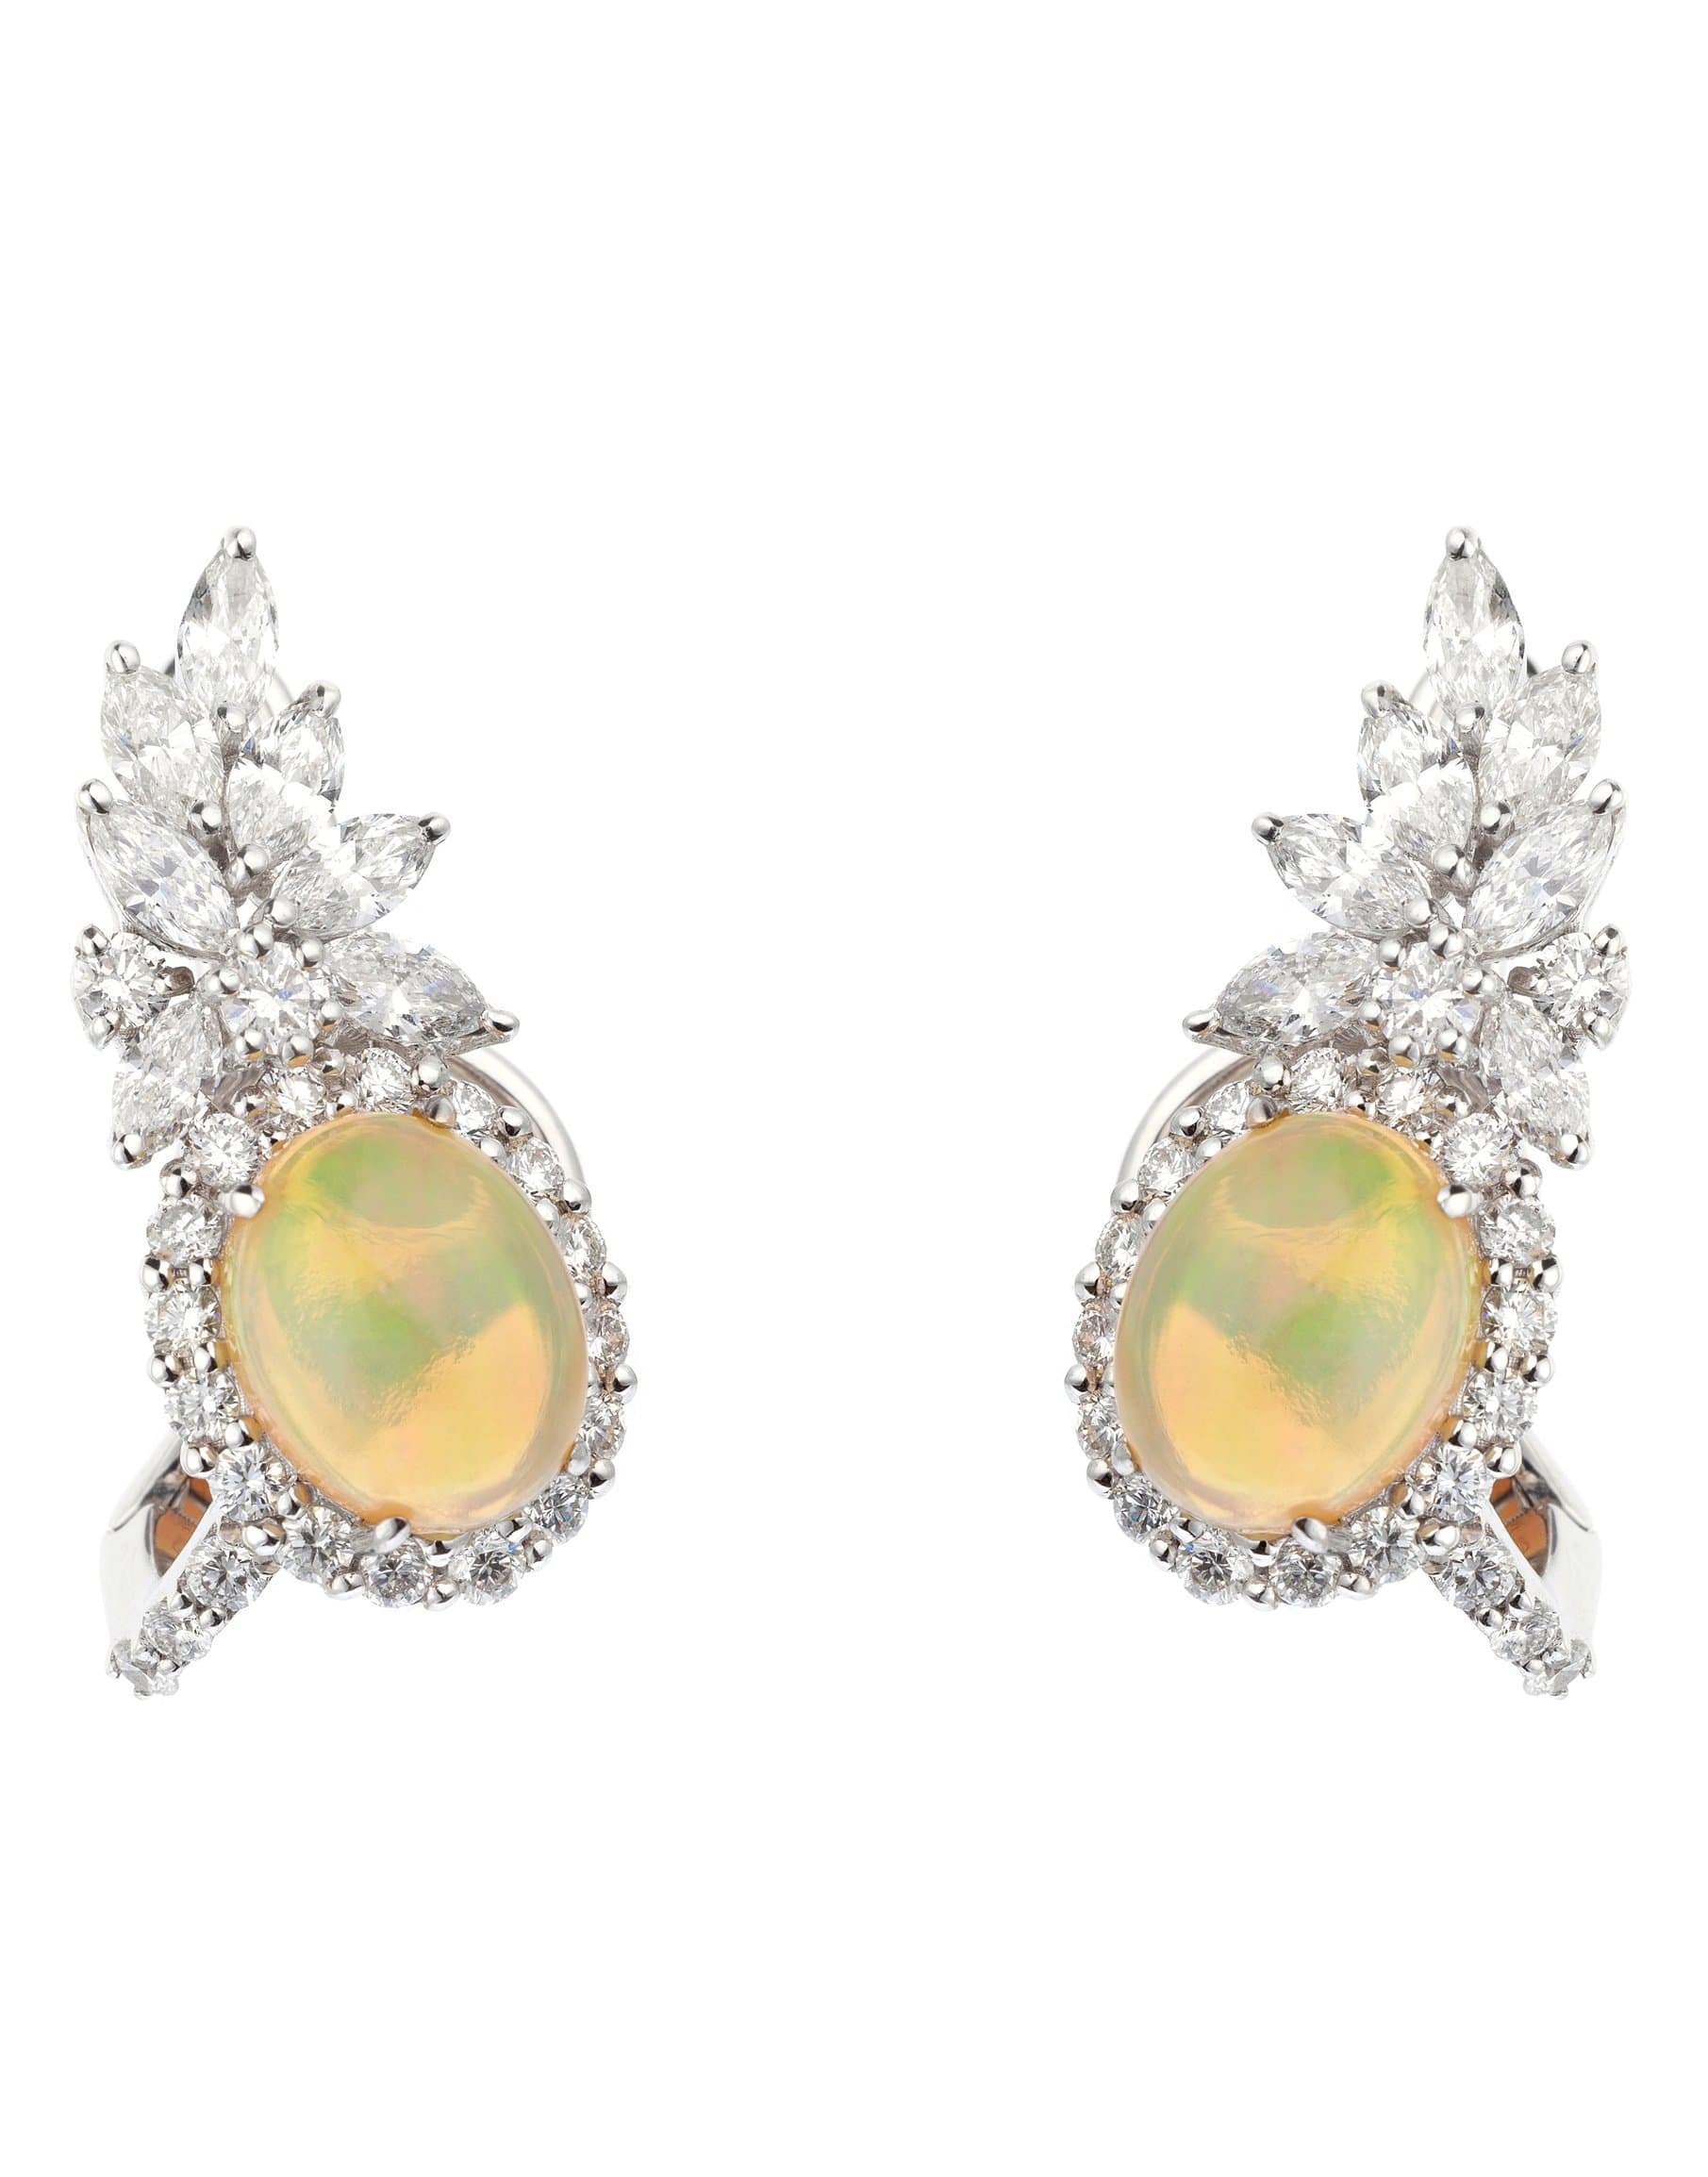 YEPREM JEWELLERY-Opal and Diamond Earrings-WHITE GOLD